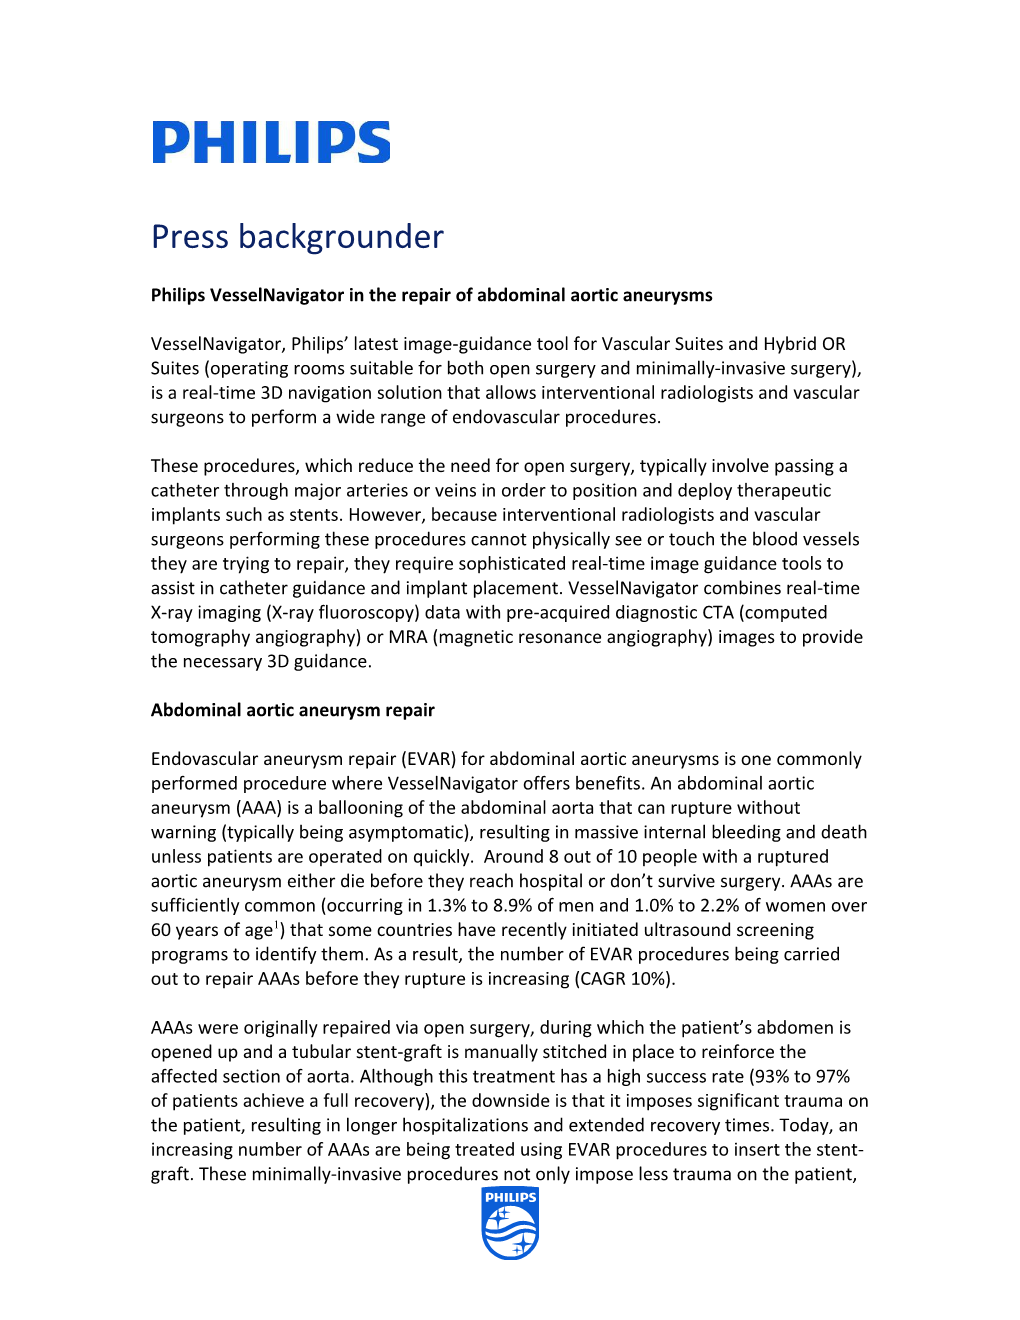 Philips Vesselnavigator in the Repair of Abdominal Aortic Aneurysms